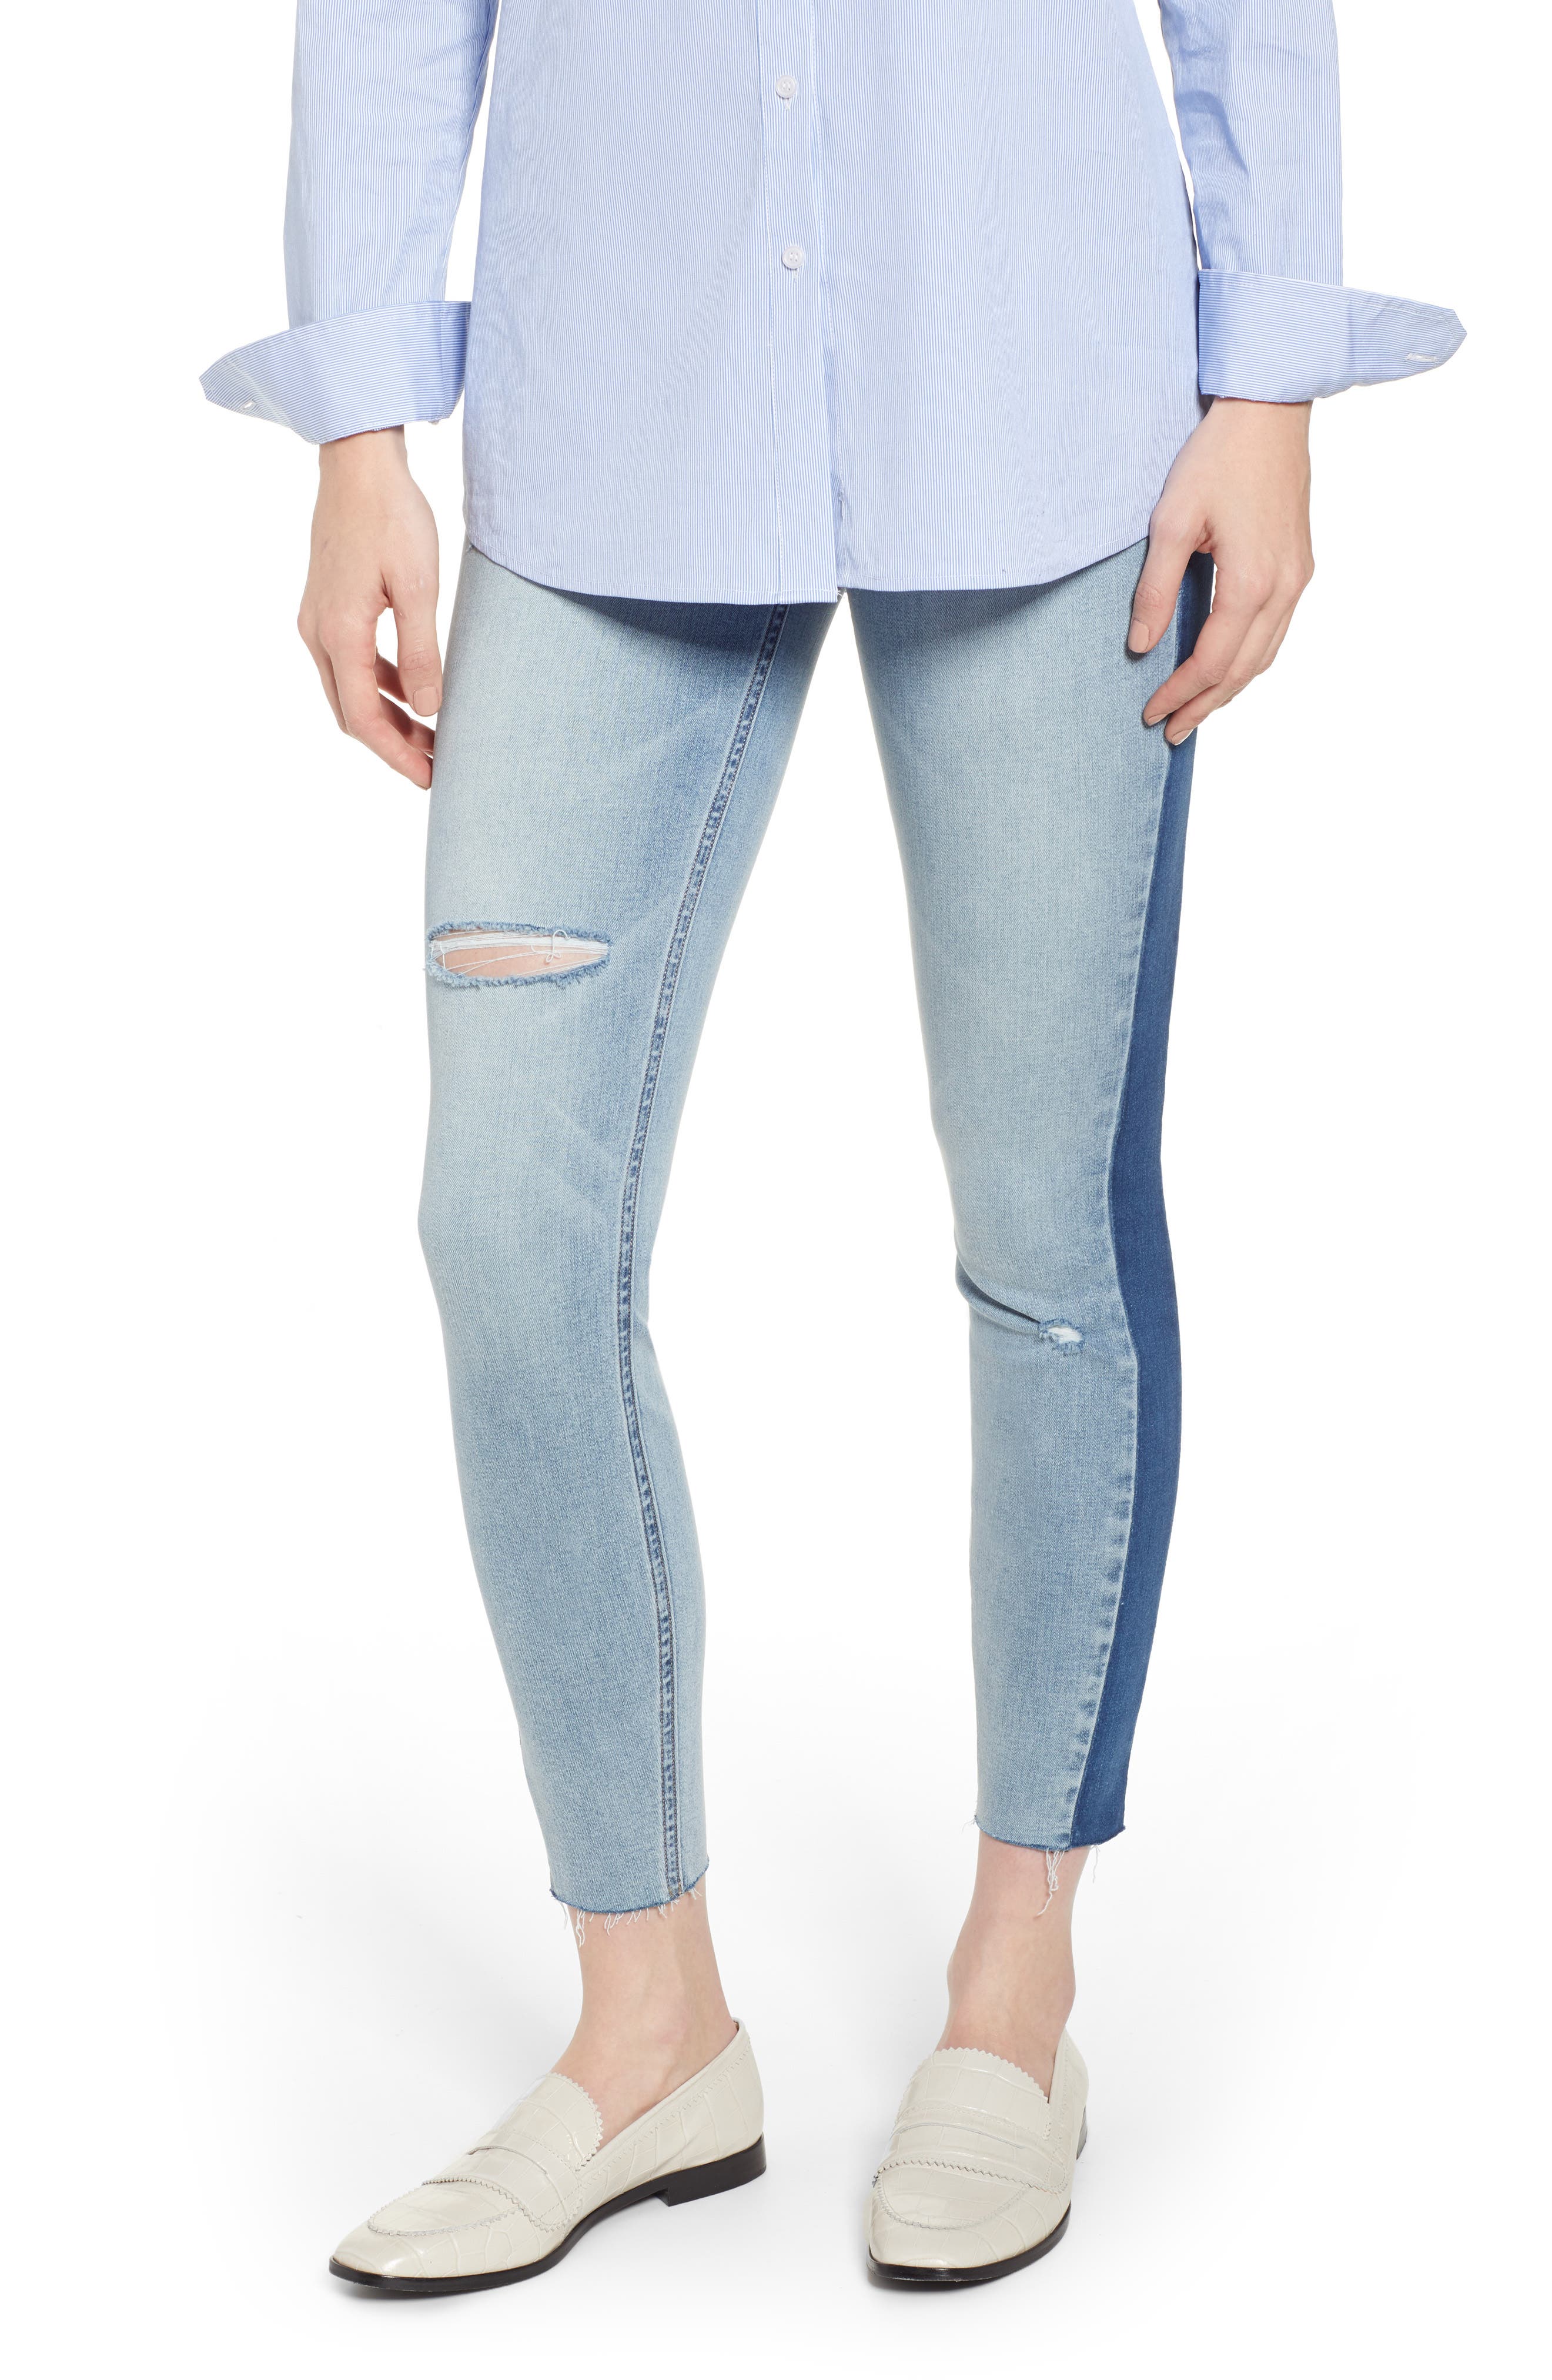 distressed skinny jeans spanx